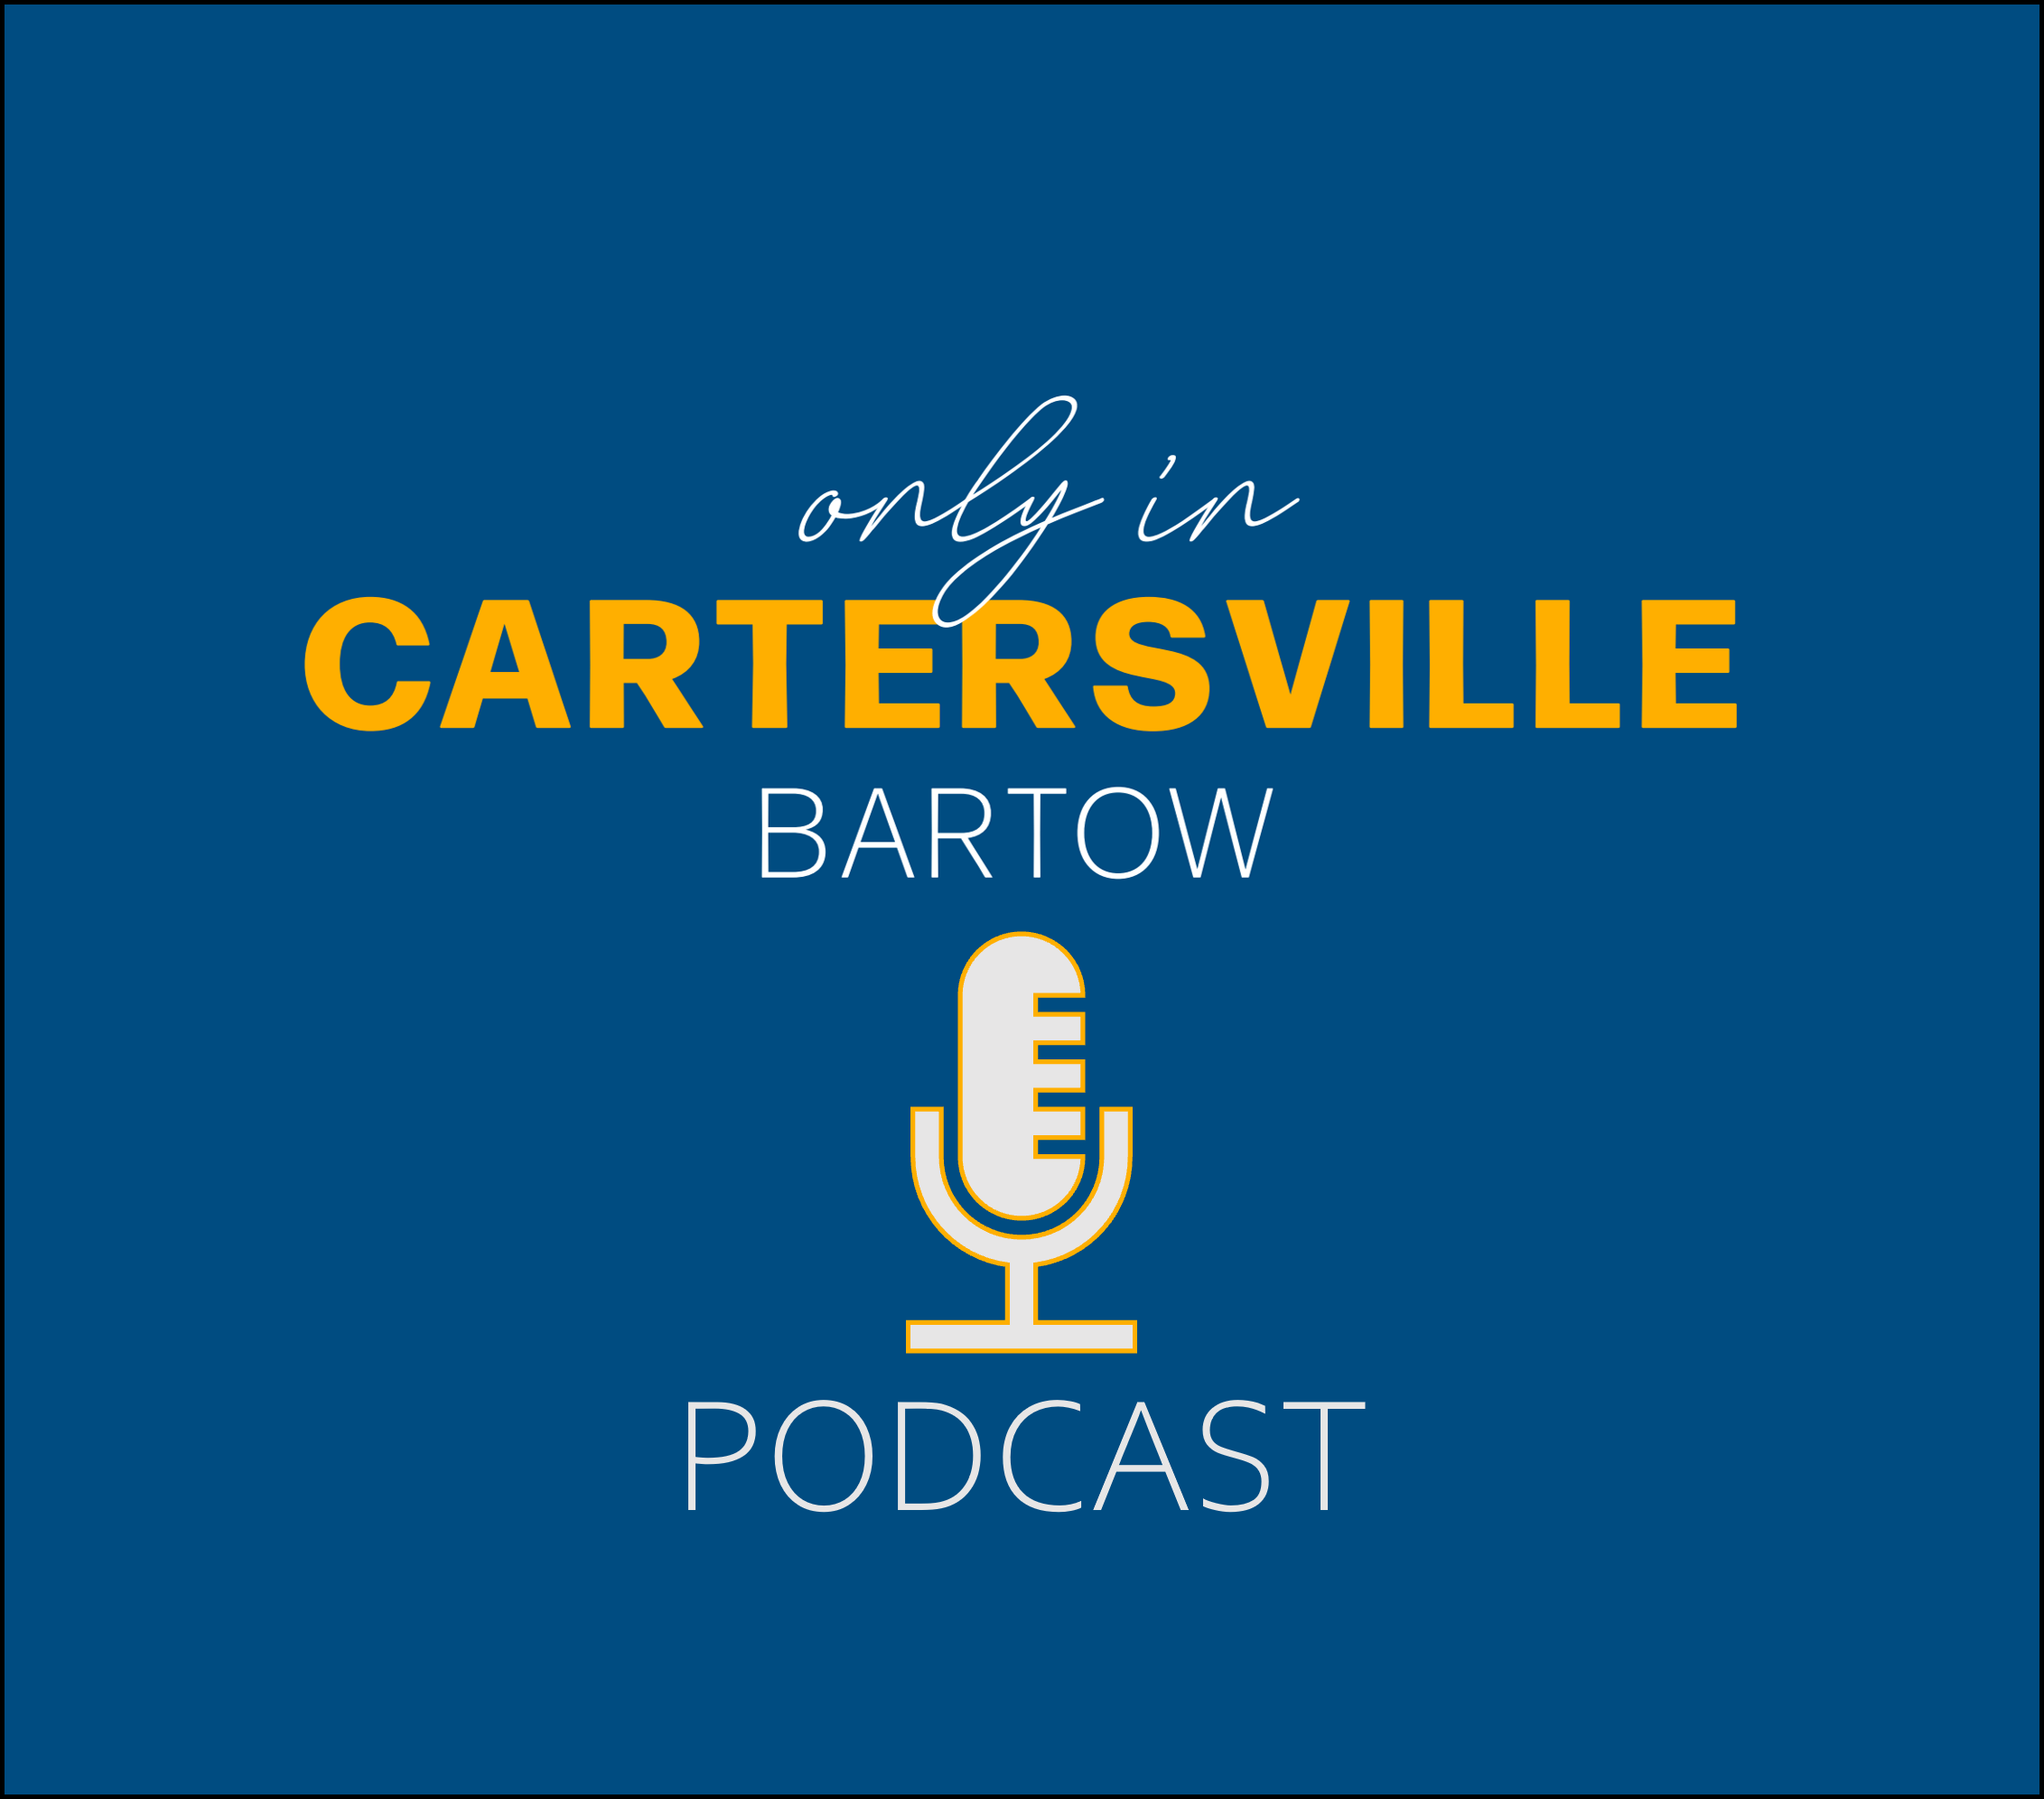 Cartersville Bartow - Arts